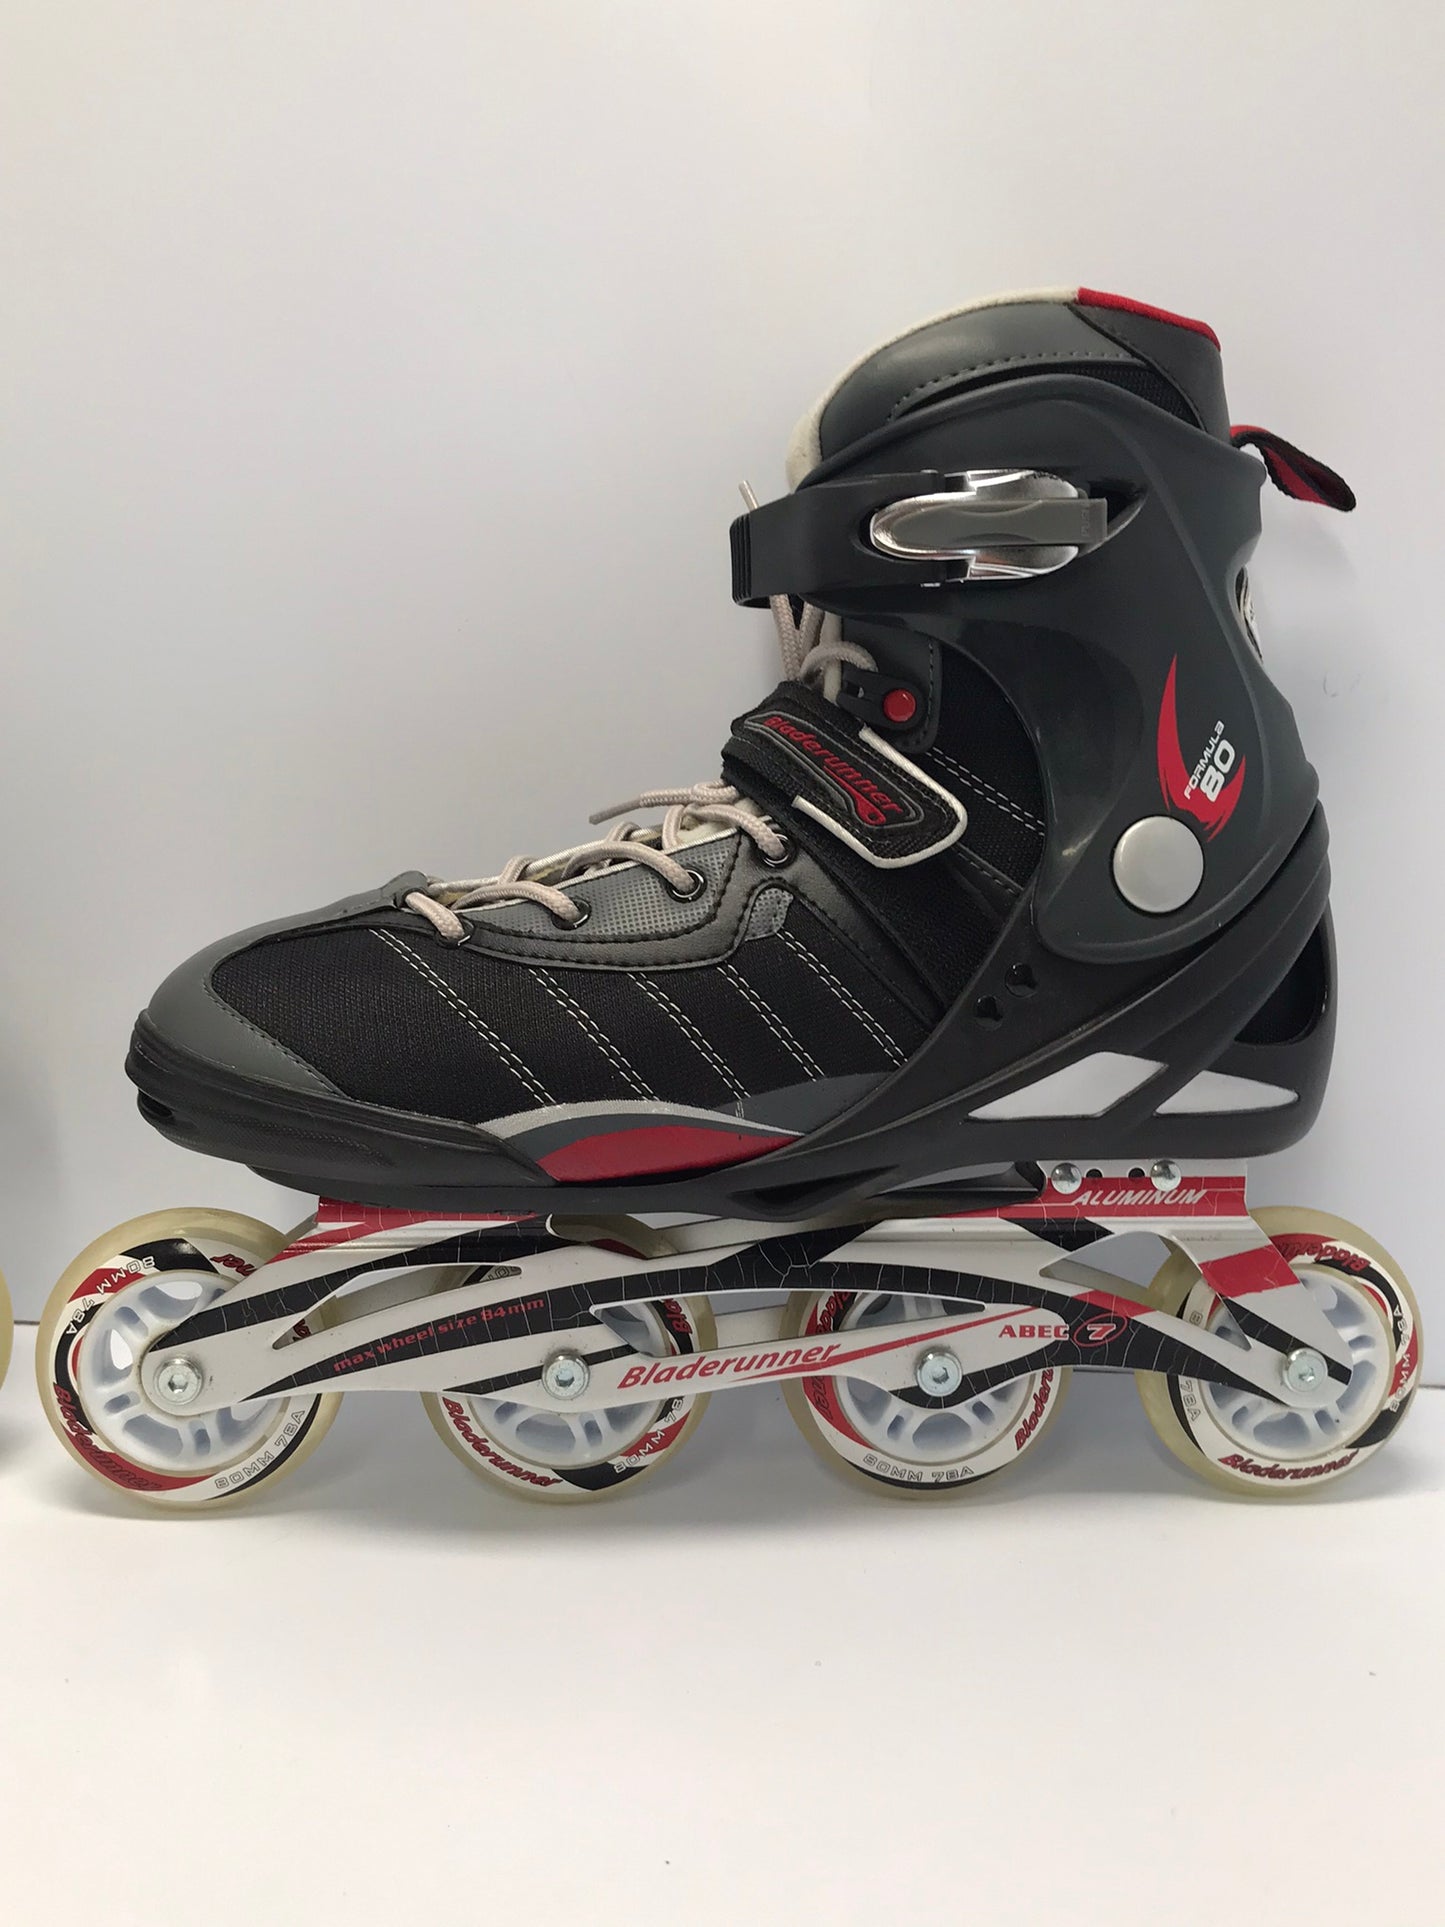 Inline Roller Skates Men's Size 10 Bladerunner Rubber Wheels Black Grey Red NEW